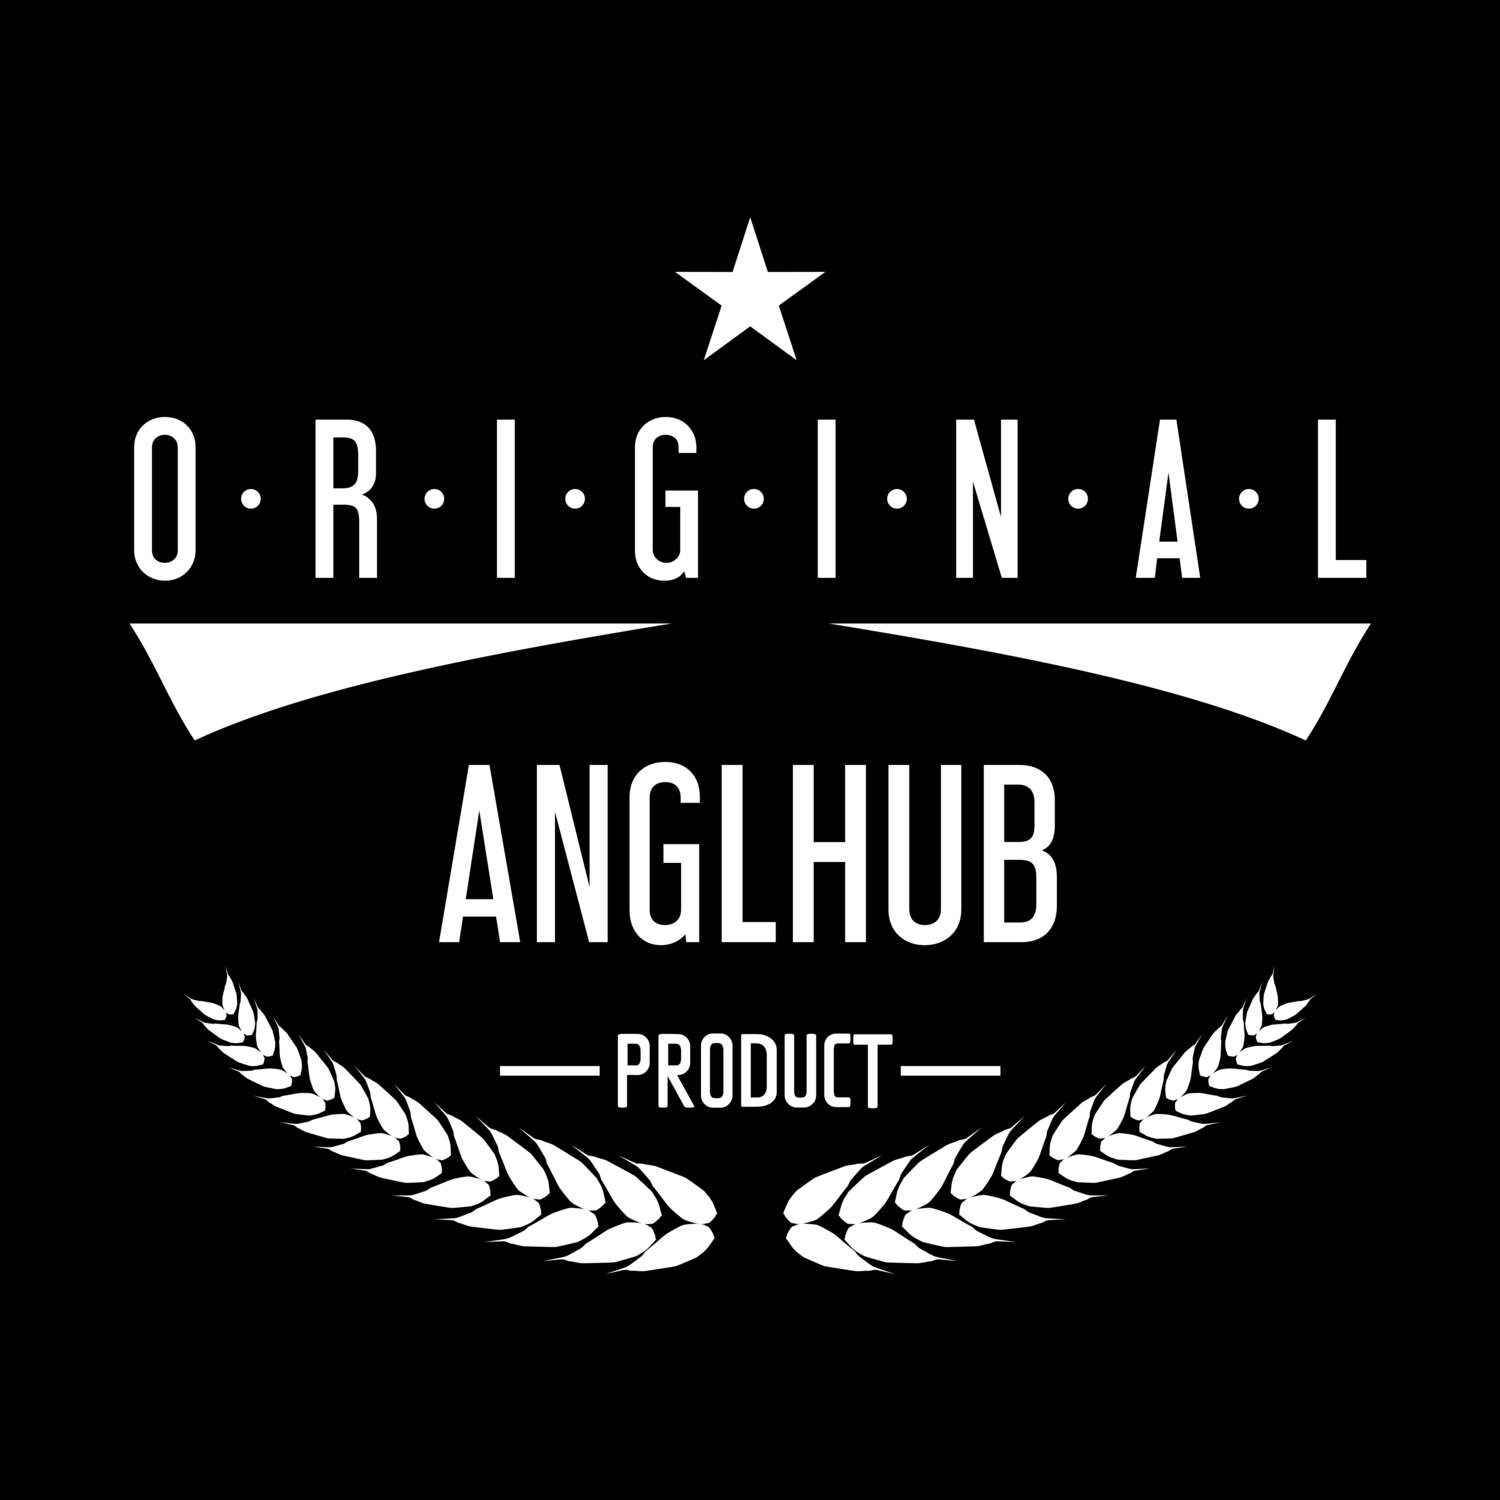 Anglhub T-Shirt »Original Product«